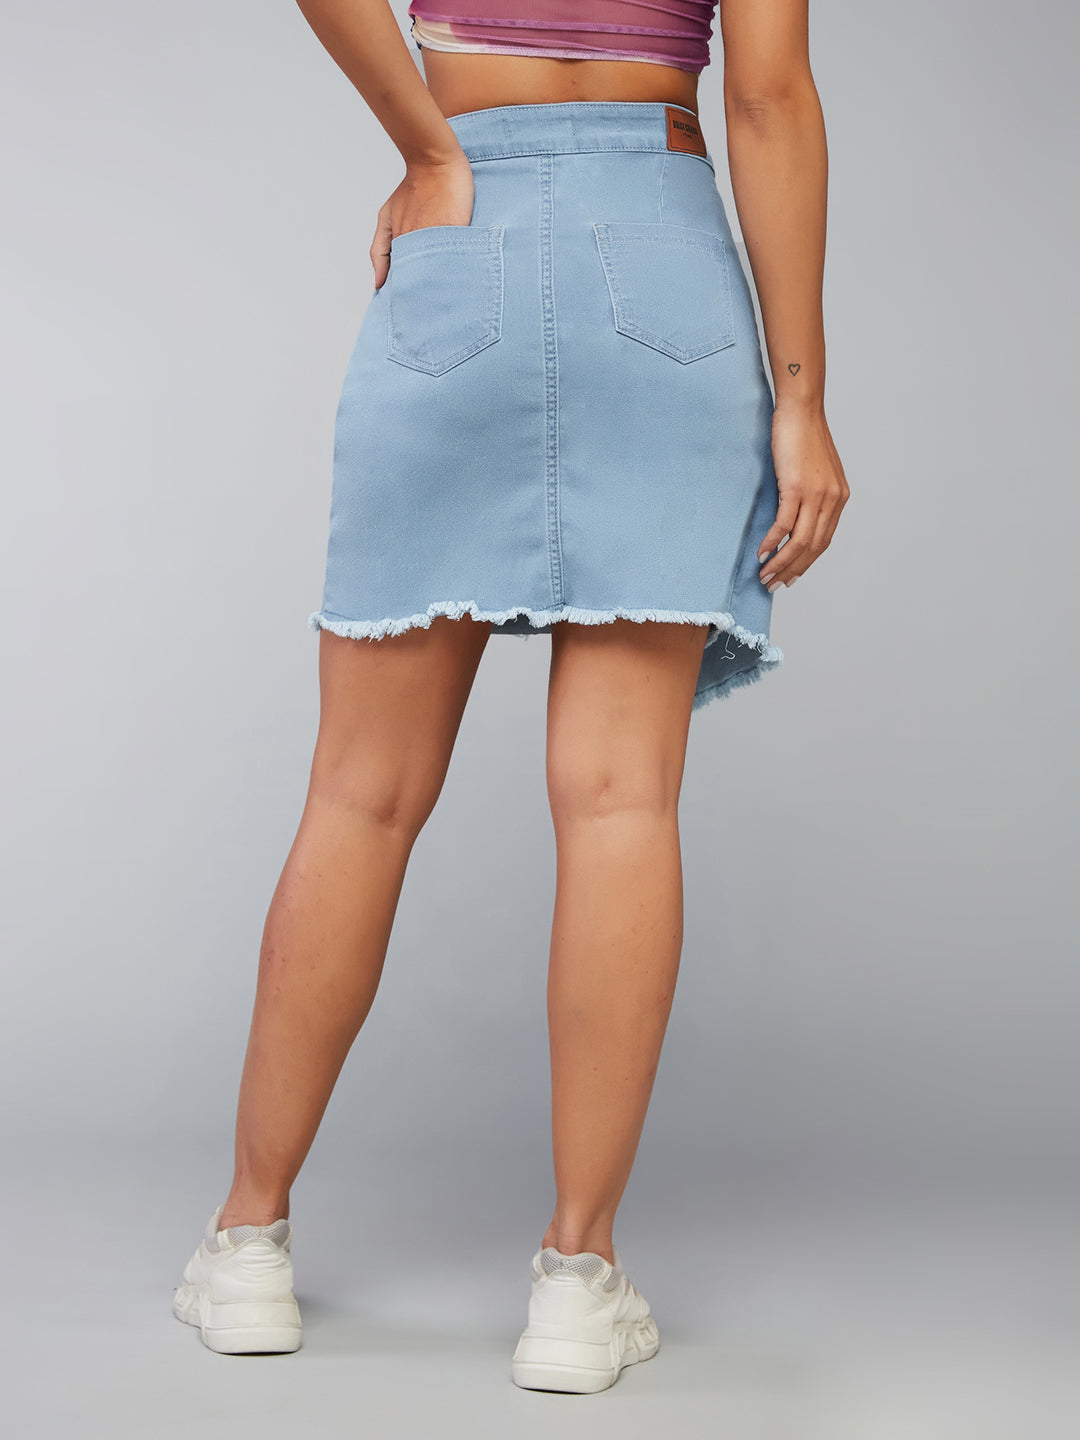 Women's Light Blue Regular High rise Clean look Above Knee Stretchable Denim Skirt